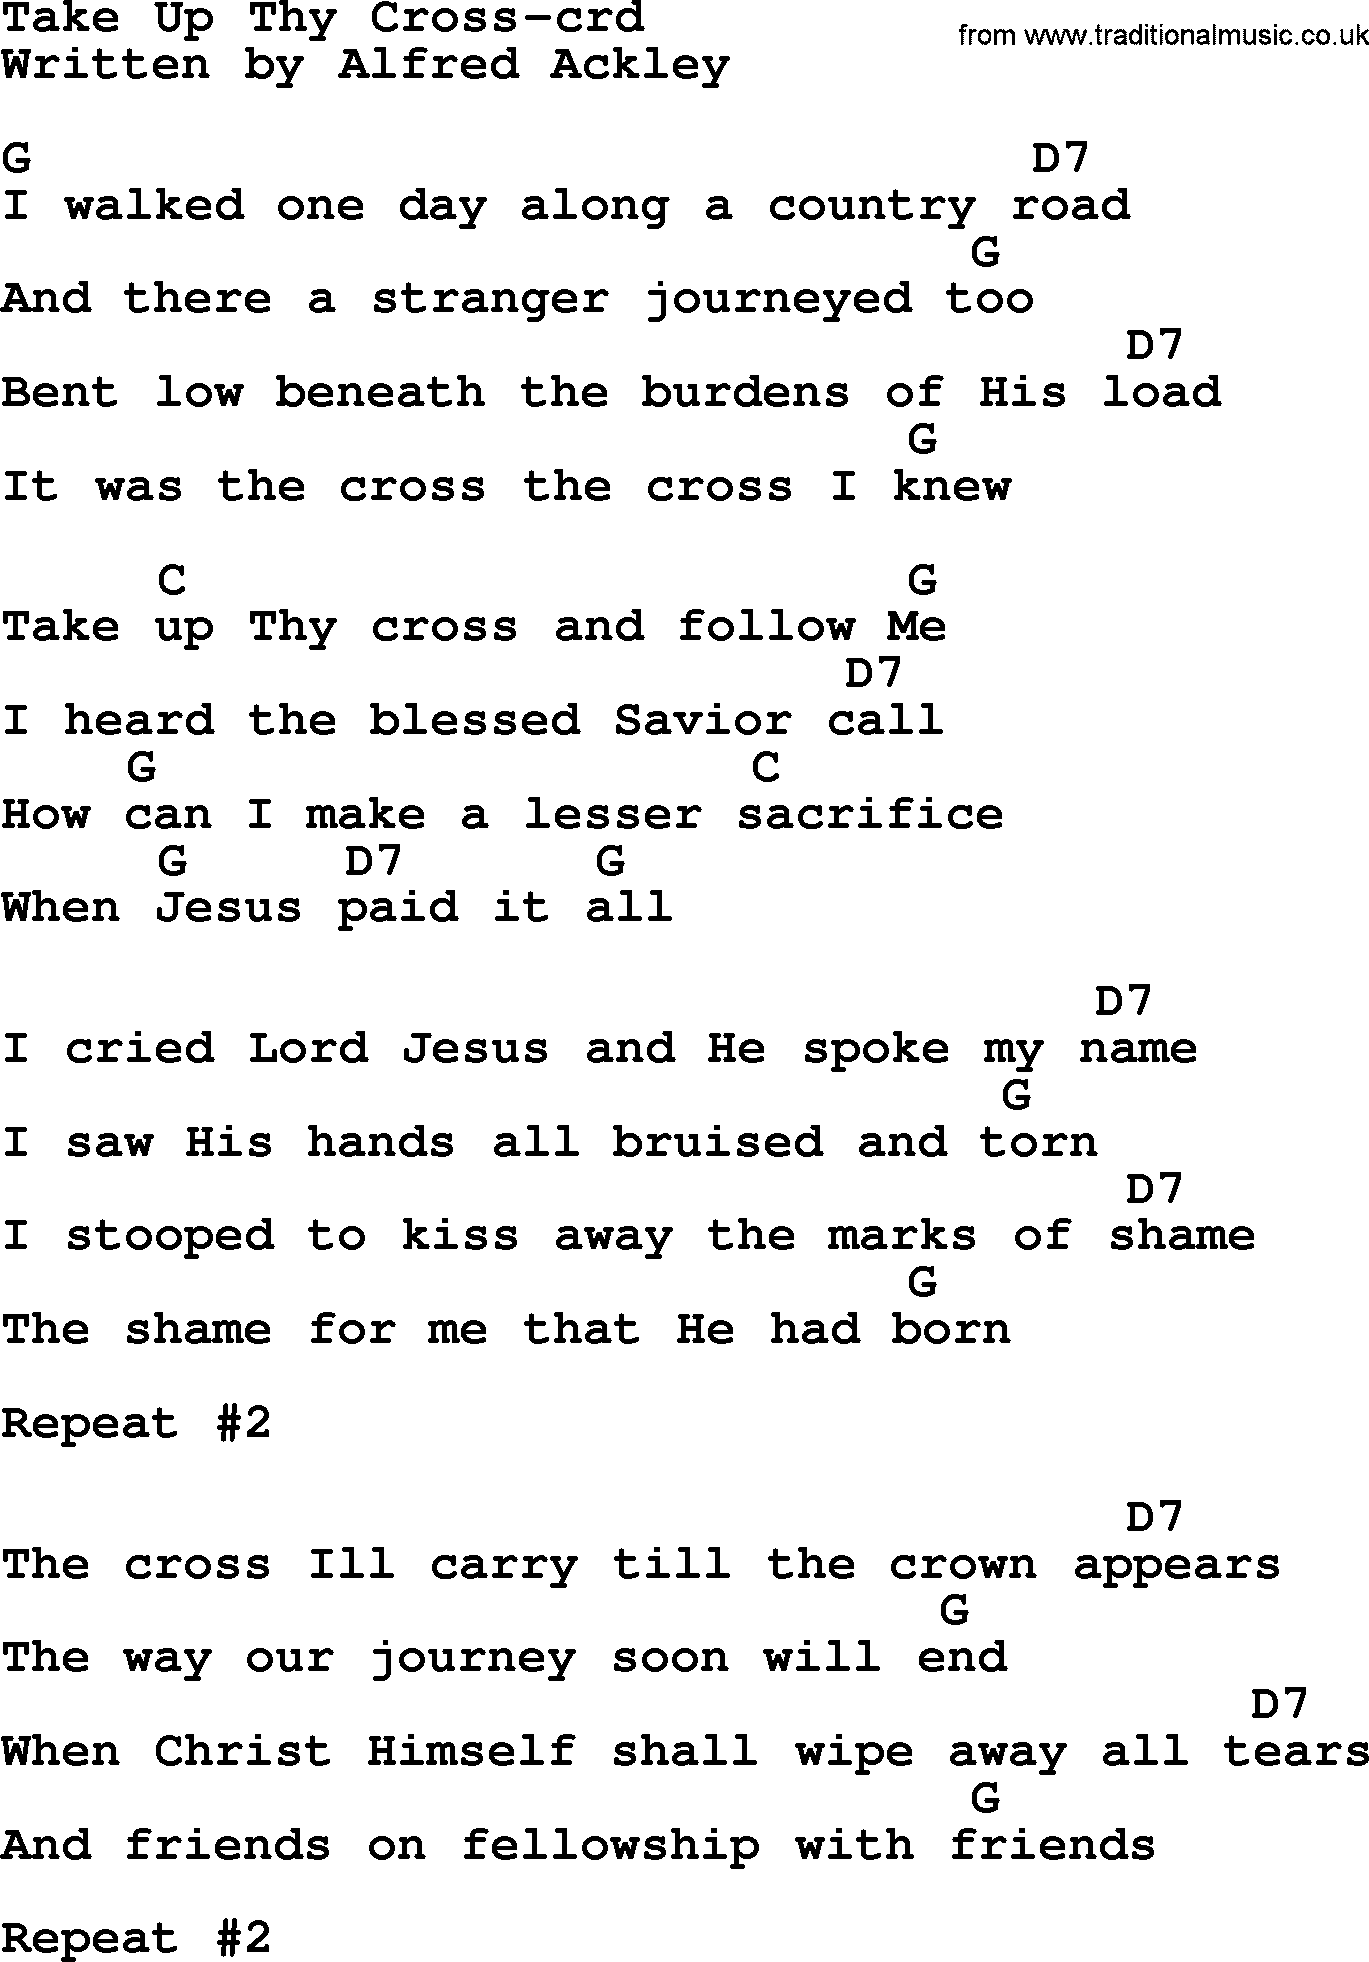 Top 500 Hymn: Take Up Thy Cross, lyrics and chords